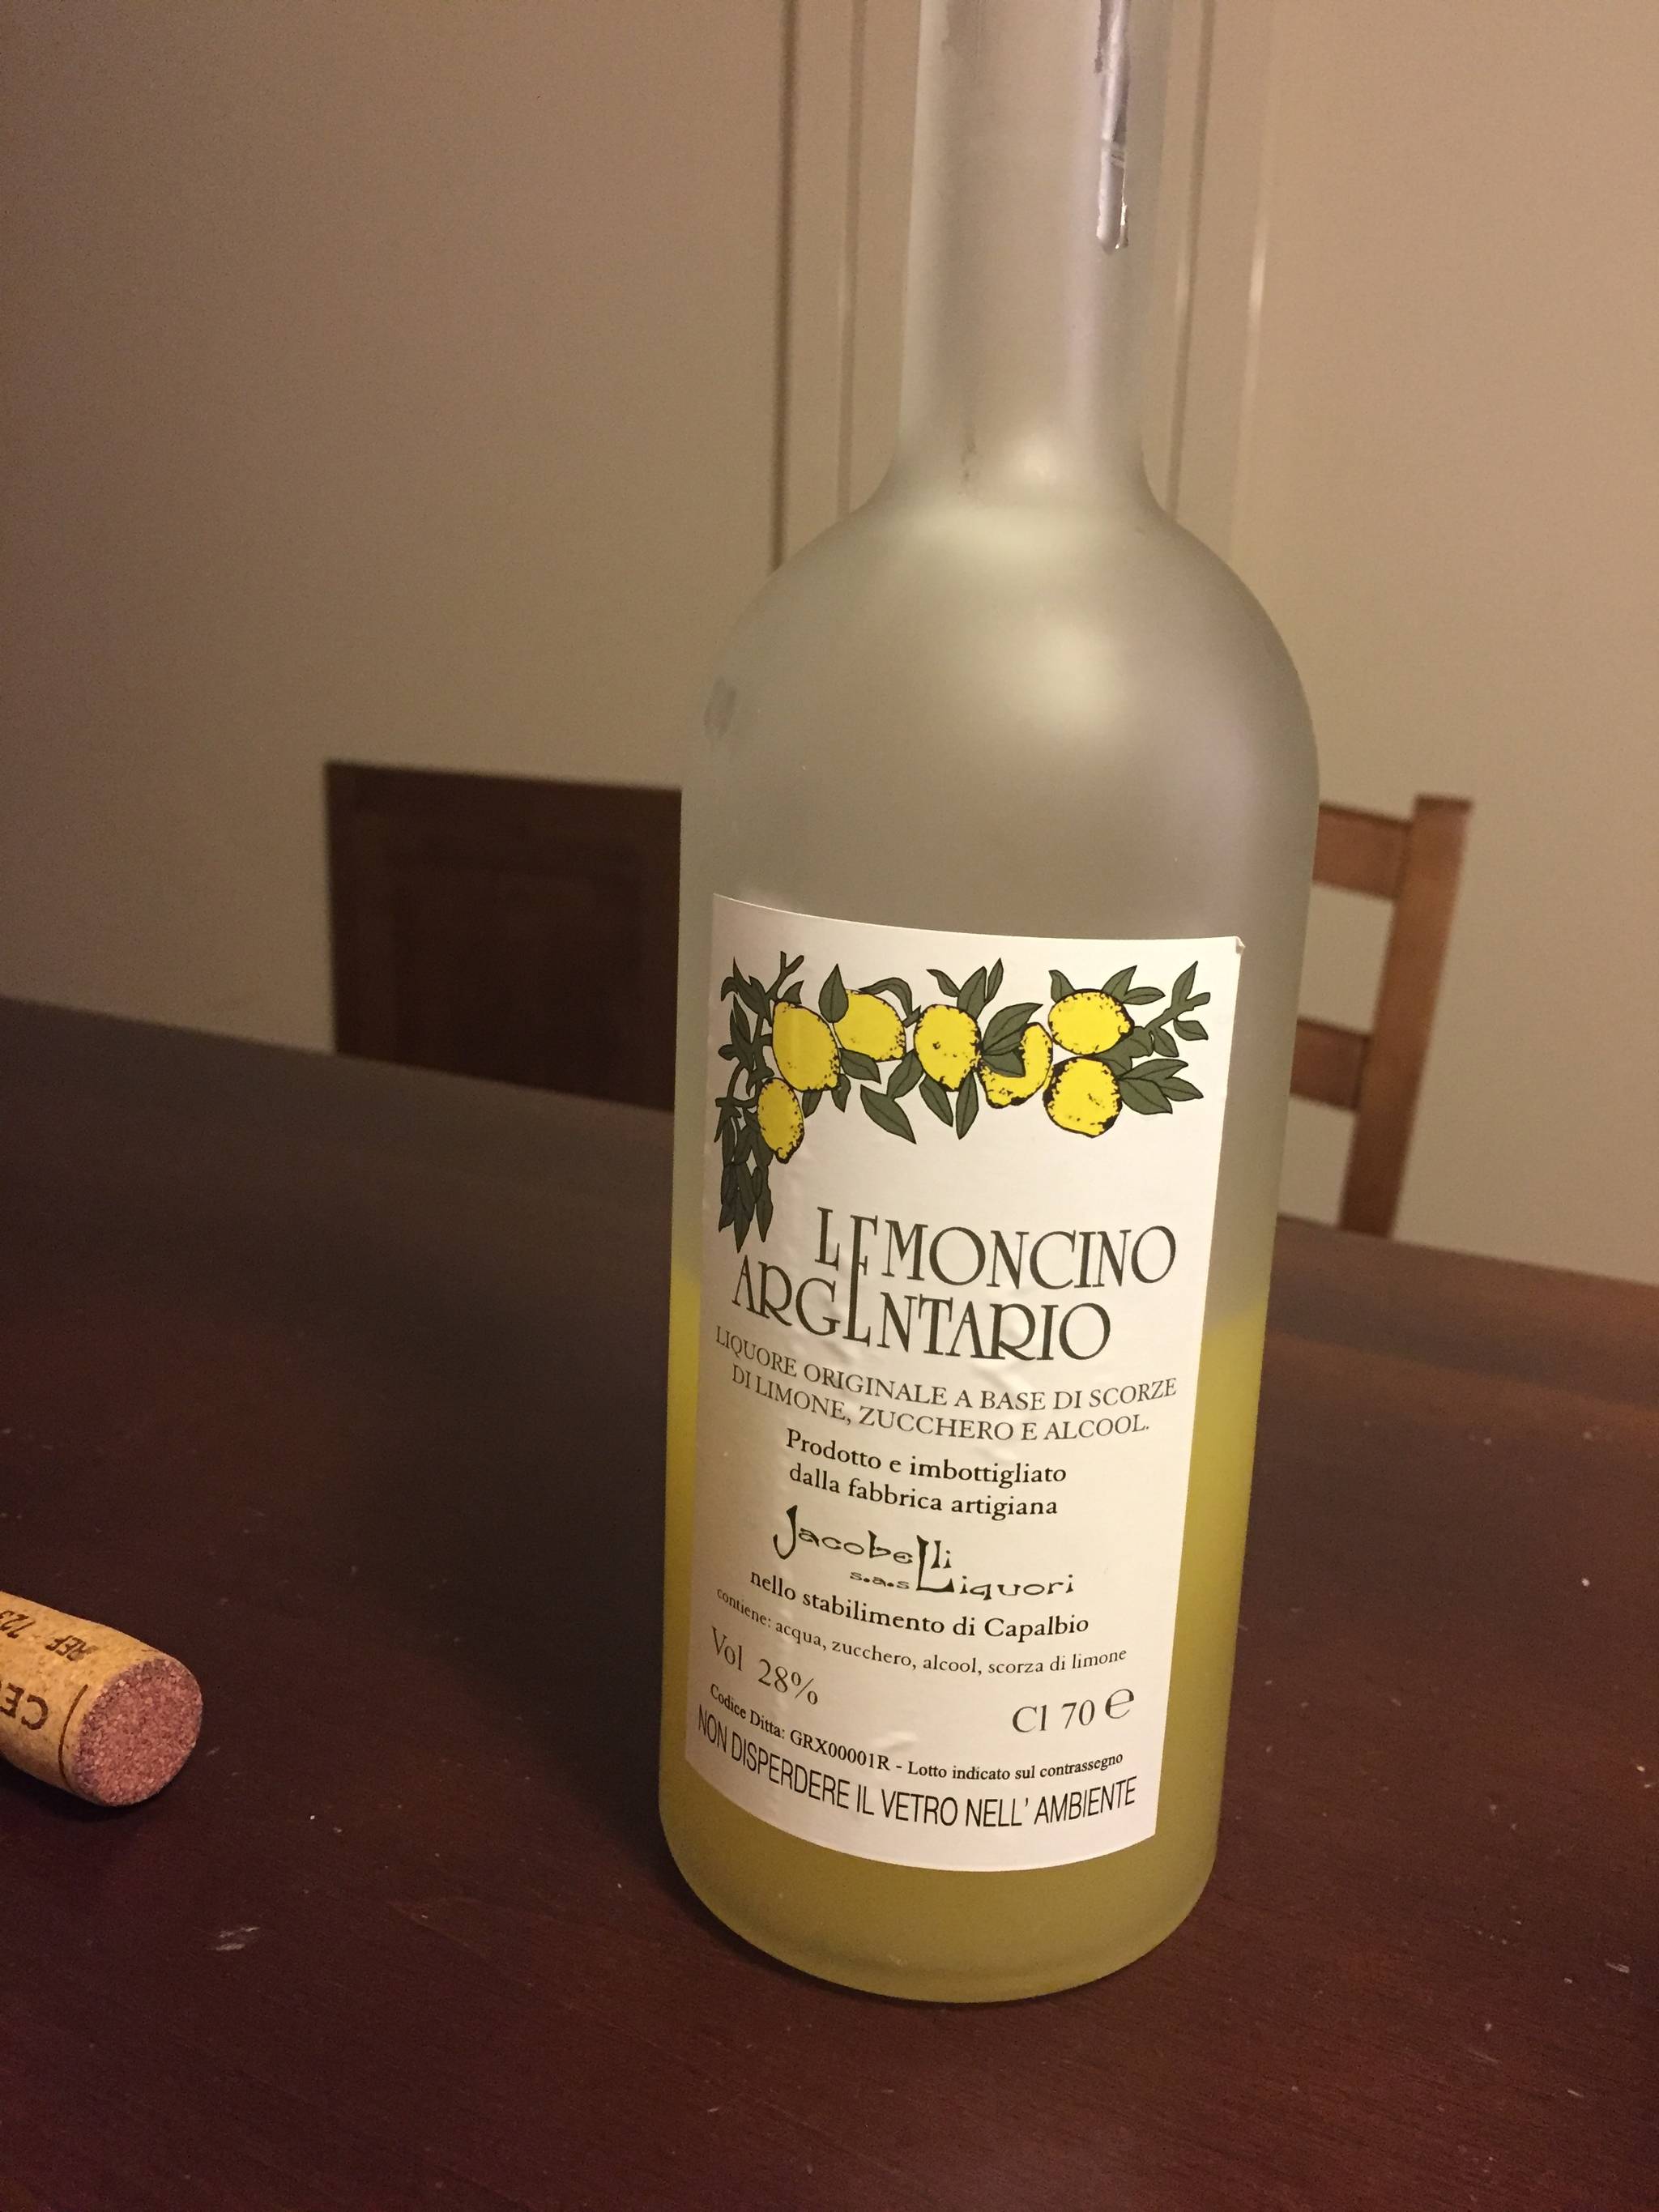 Lemon and Italy